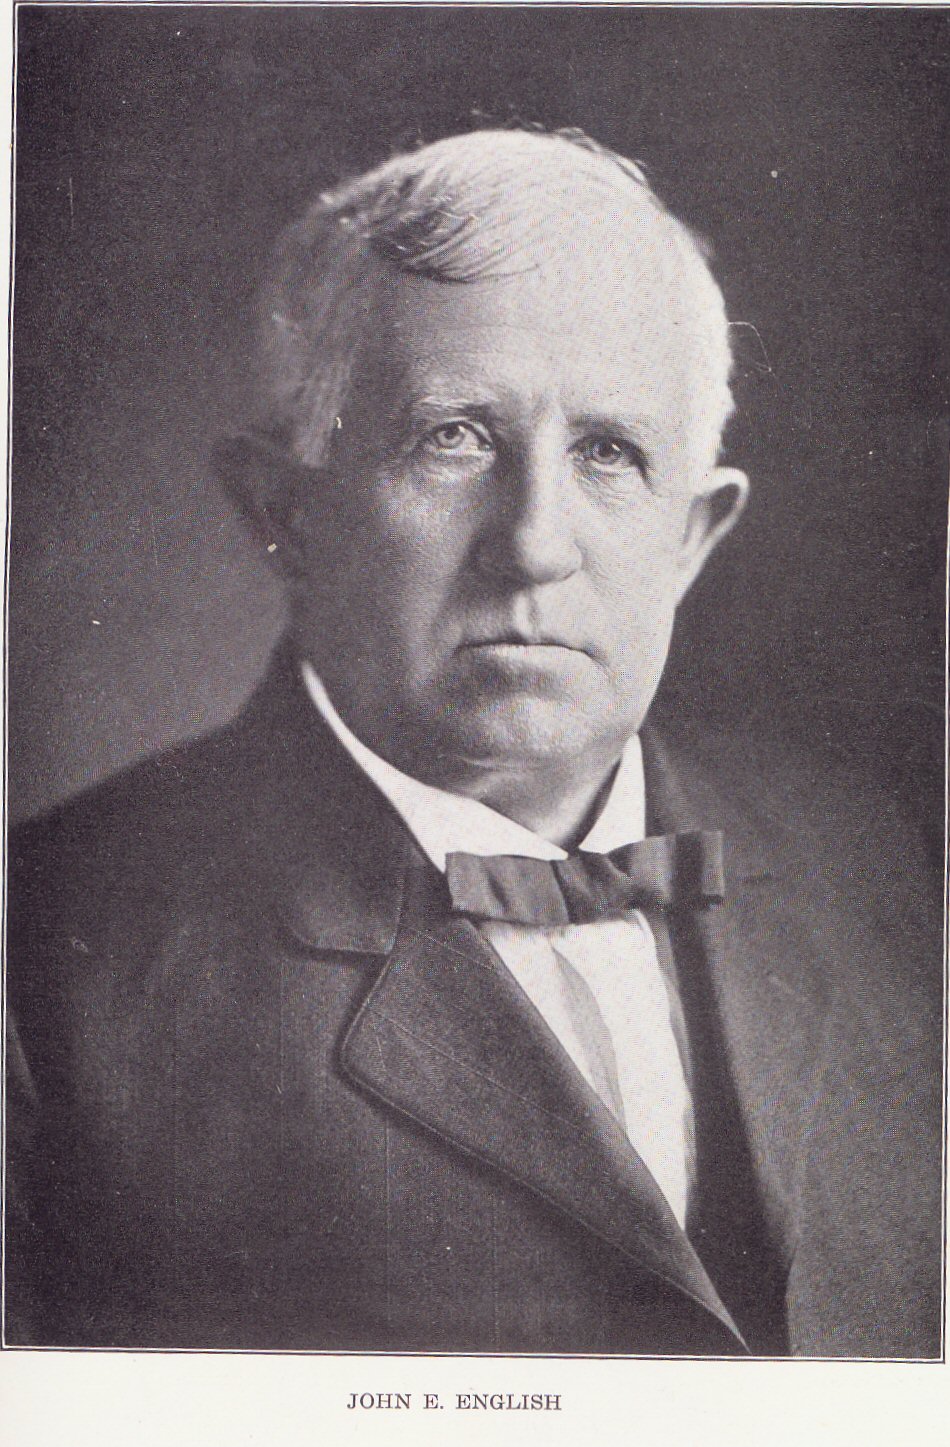 John E. English